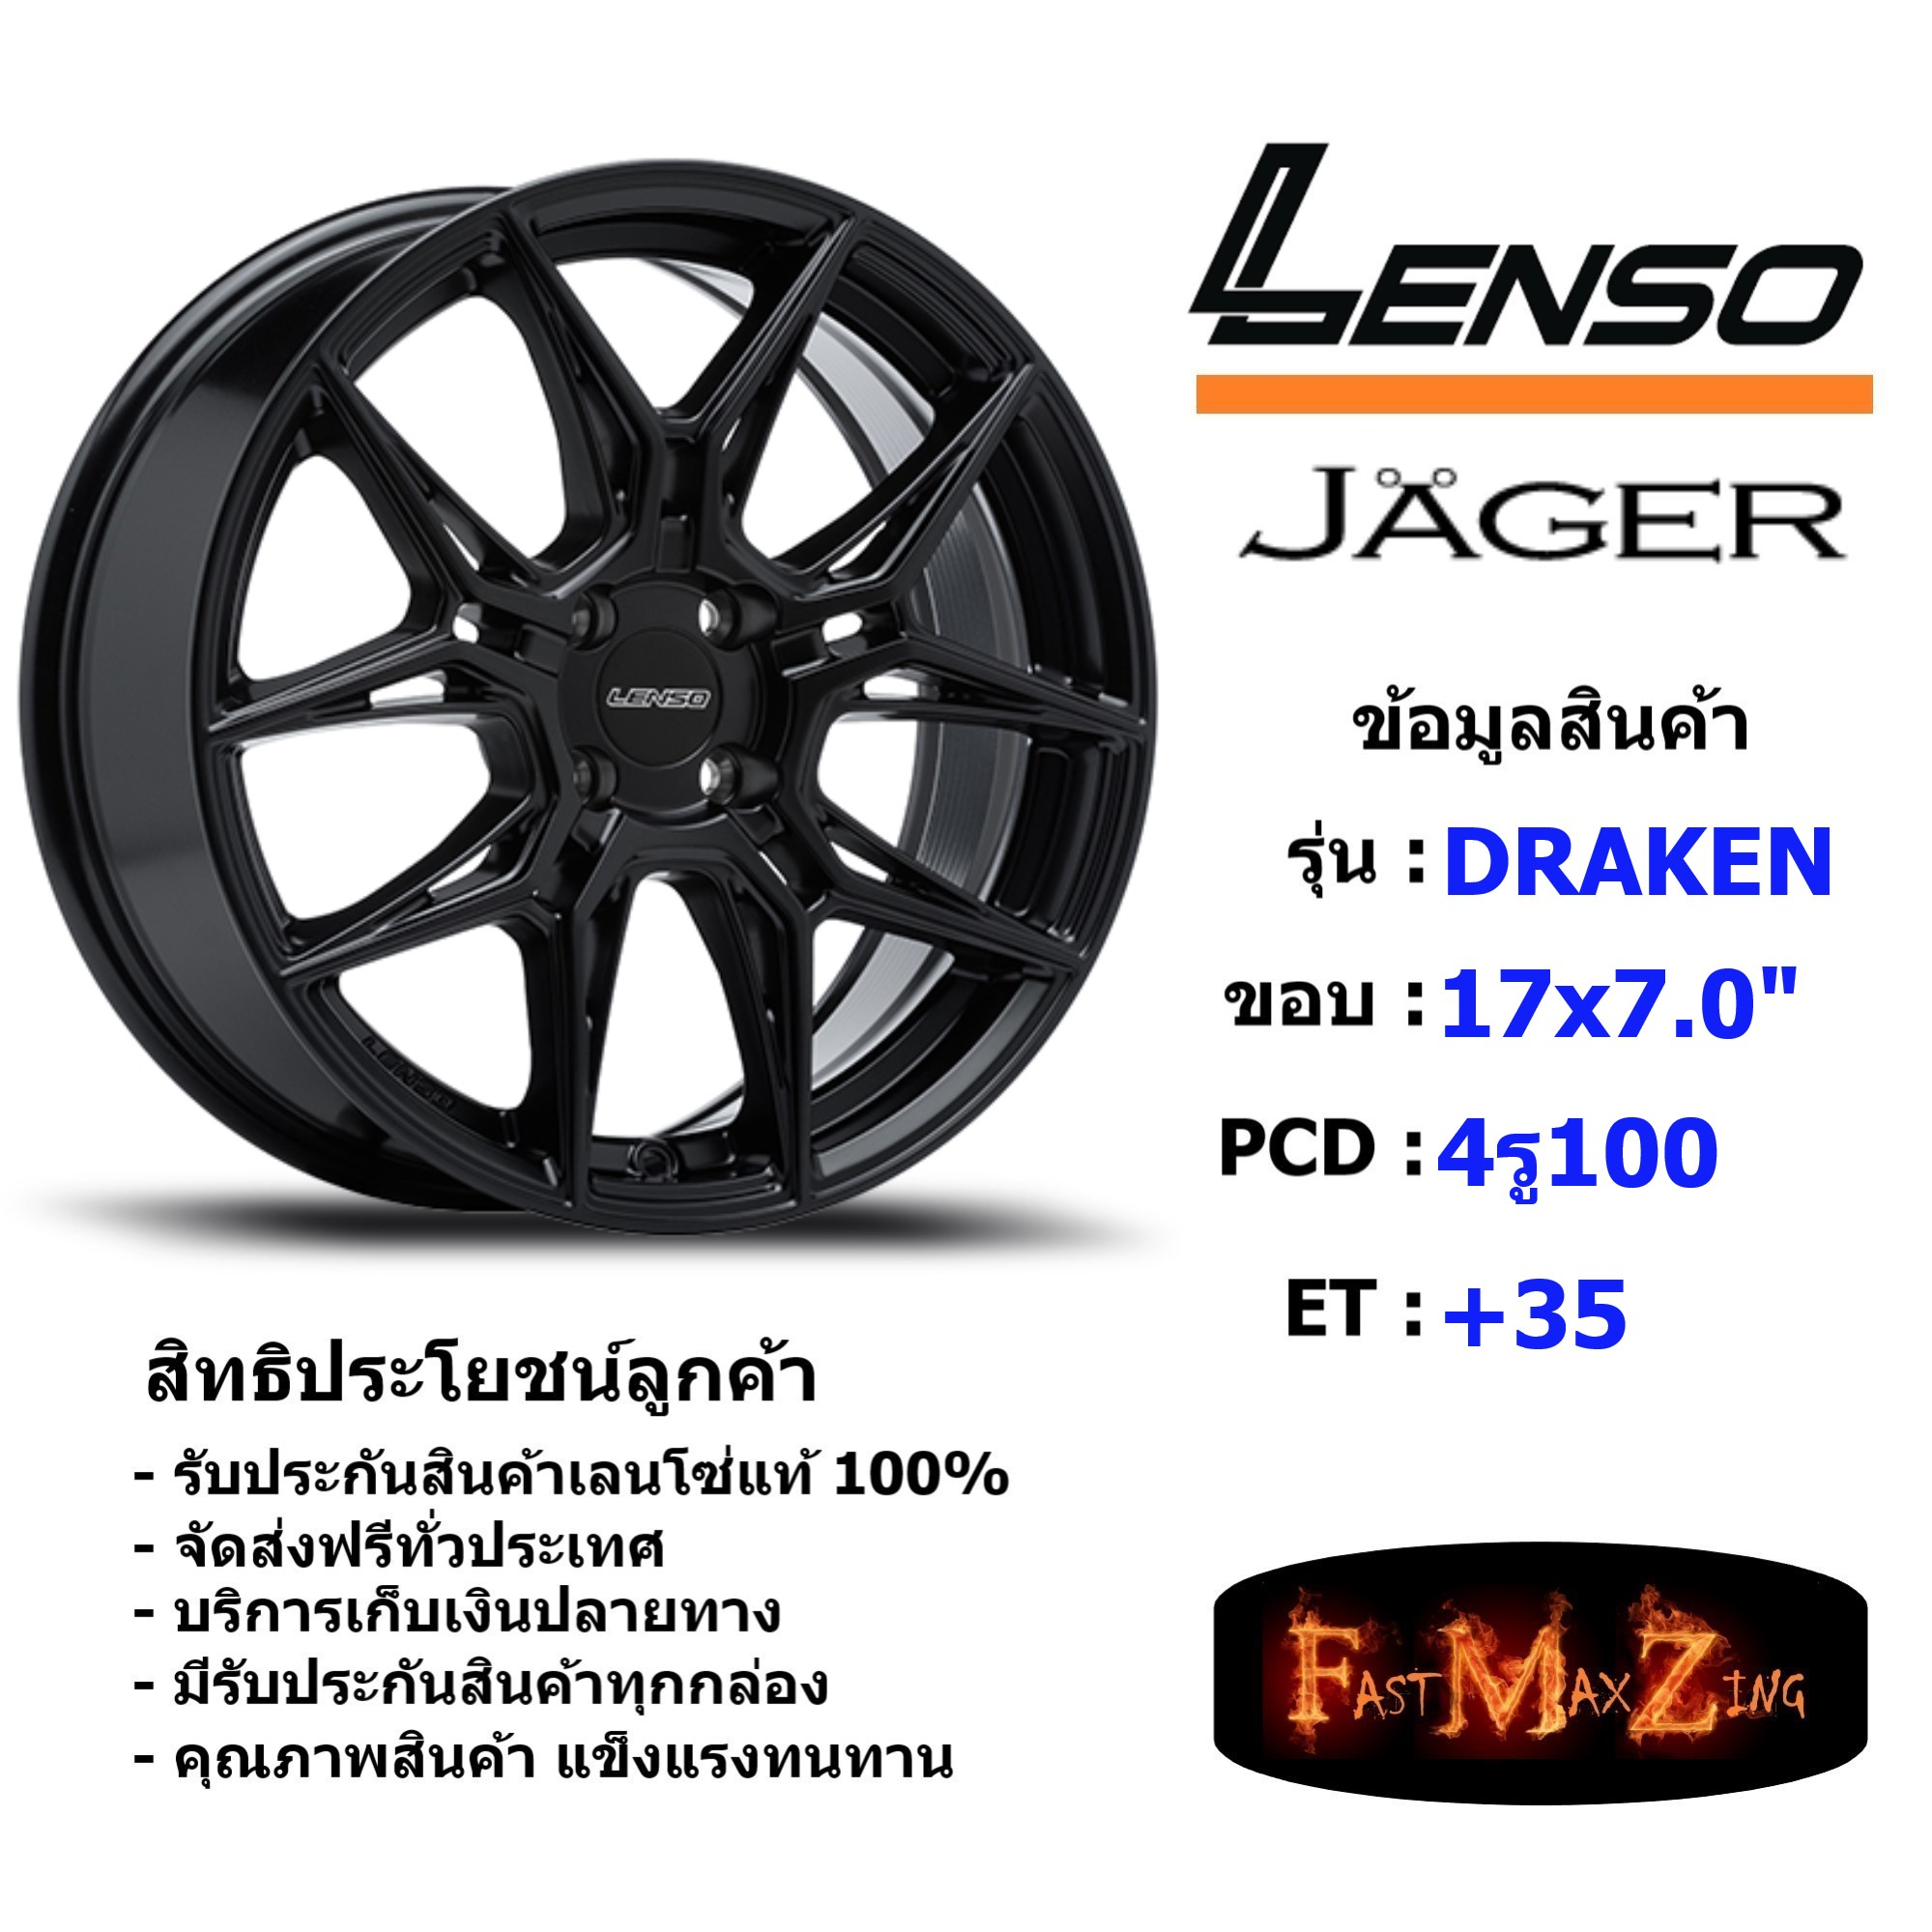 Lenso Wheel JAGER DRAKEN ขอบ 17x7.0" 4รู100 ET+35 สีMK แม็กเลนโซ่ ล้อแม็ก เลนโซ่ lenso17 แม็กรถยนต์ขอบ17 แม็กขอบ17